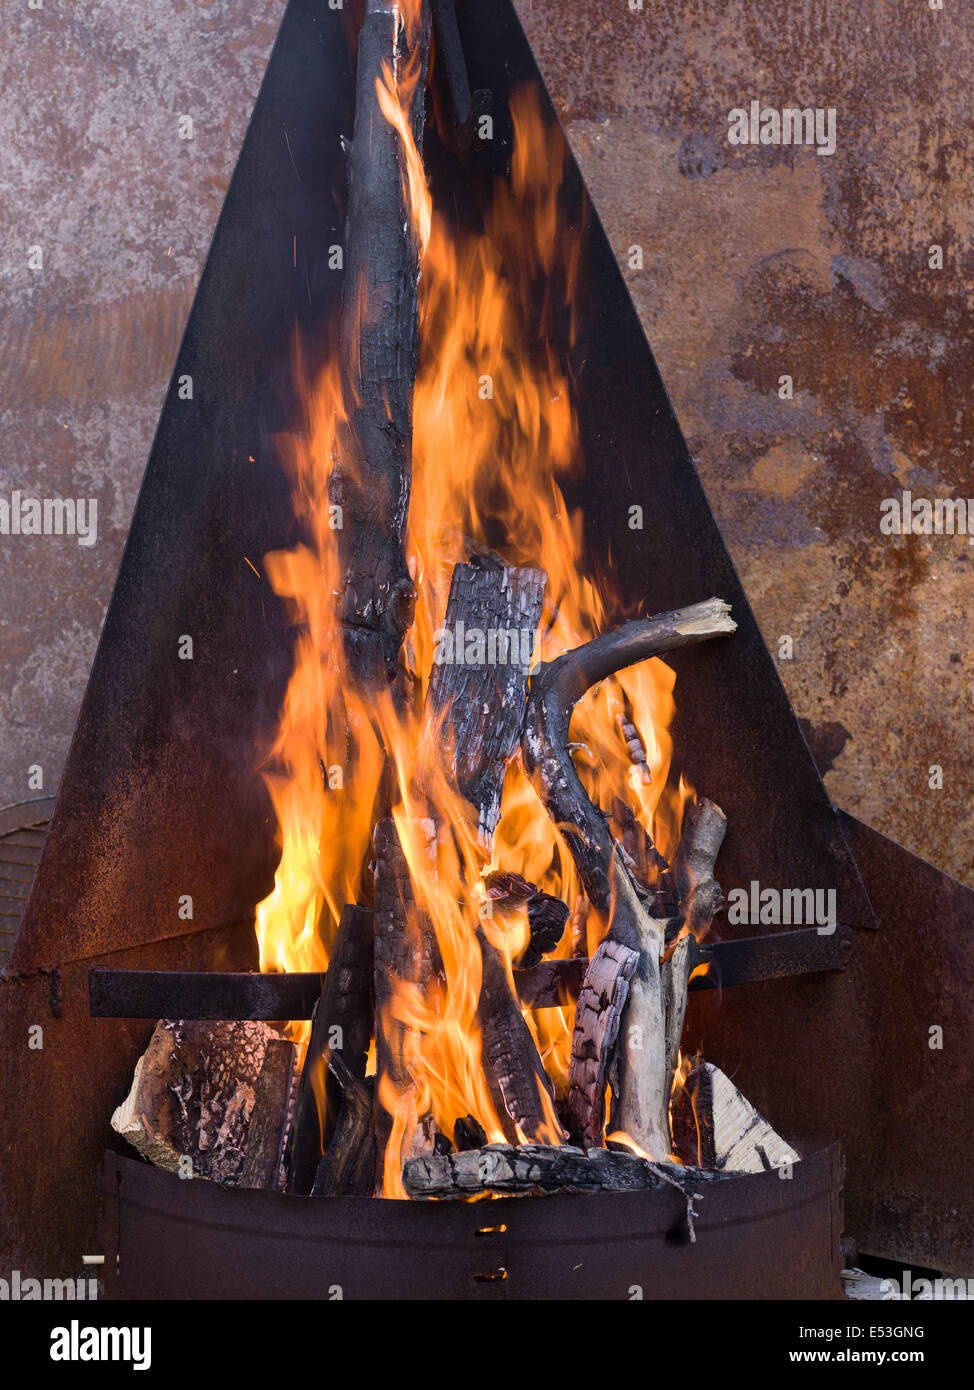 metal iron fireplace fire place garden grill hot wood burn burning Stock Photo